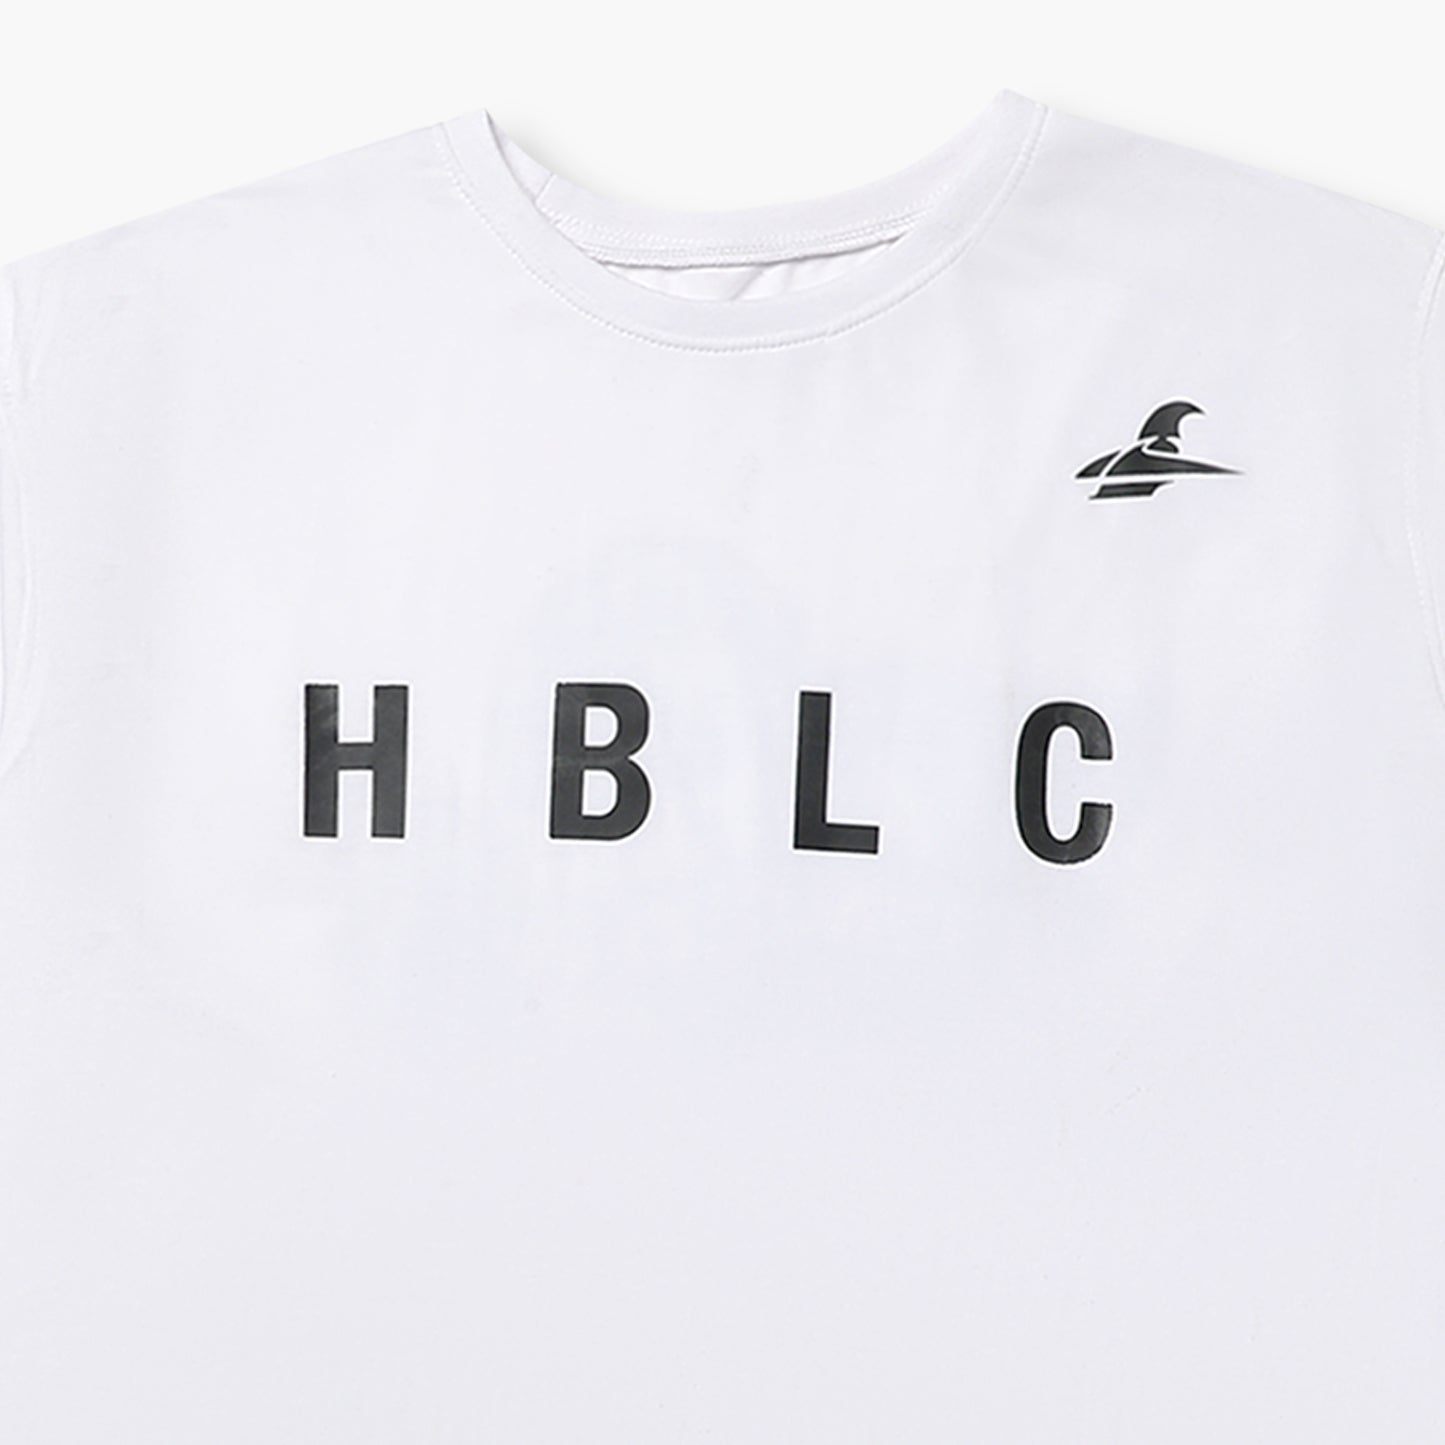 Arachion HBLC Oversized T-shirt | White